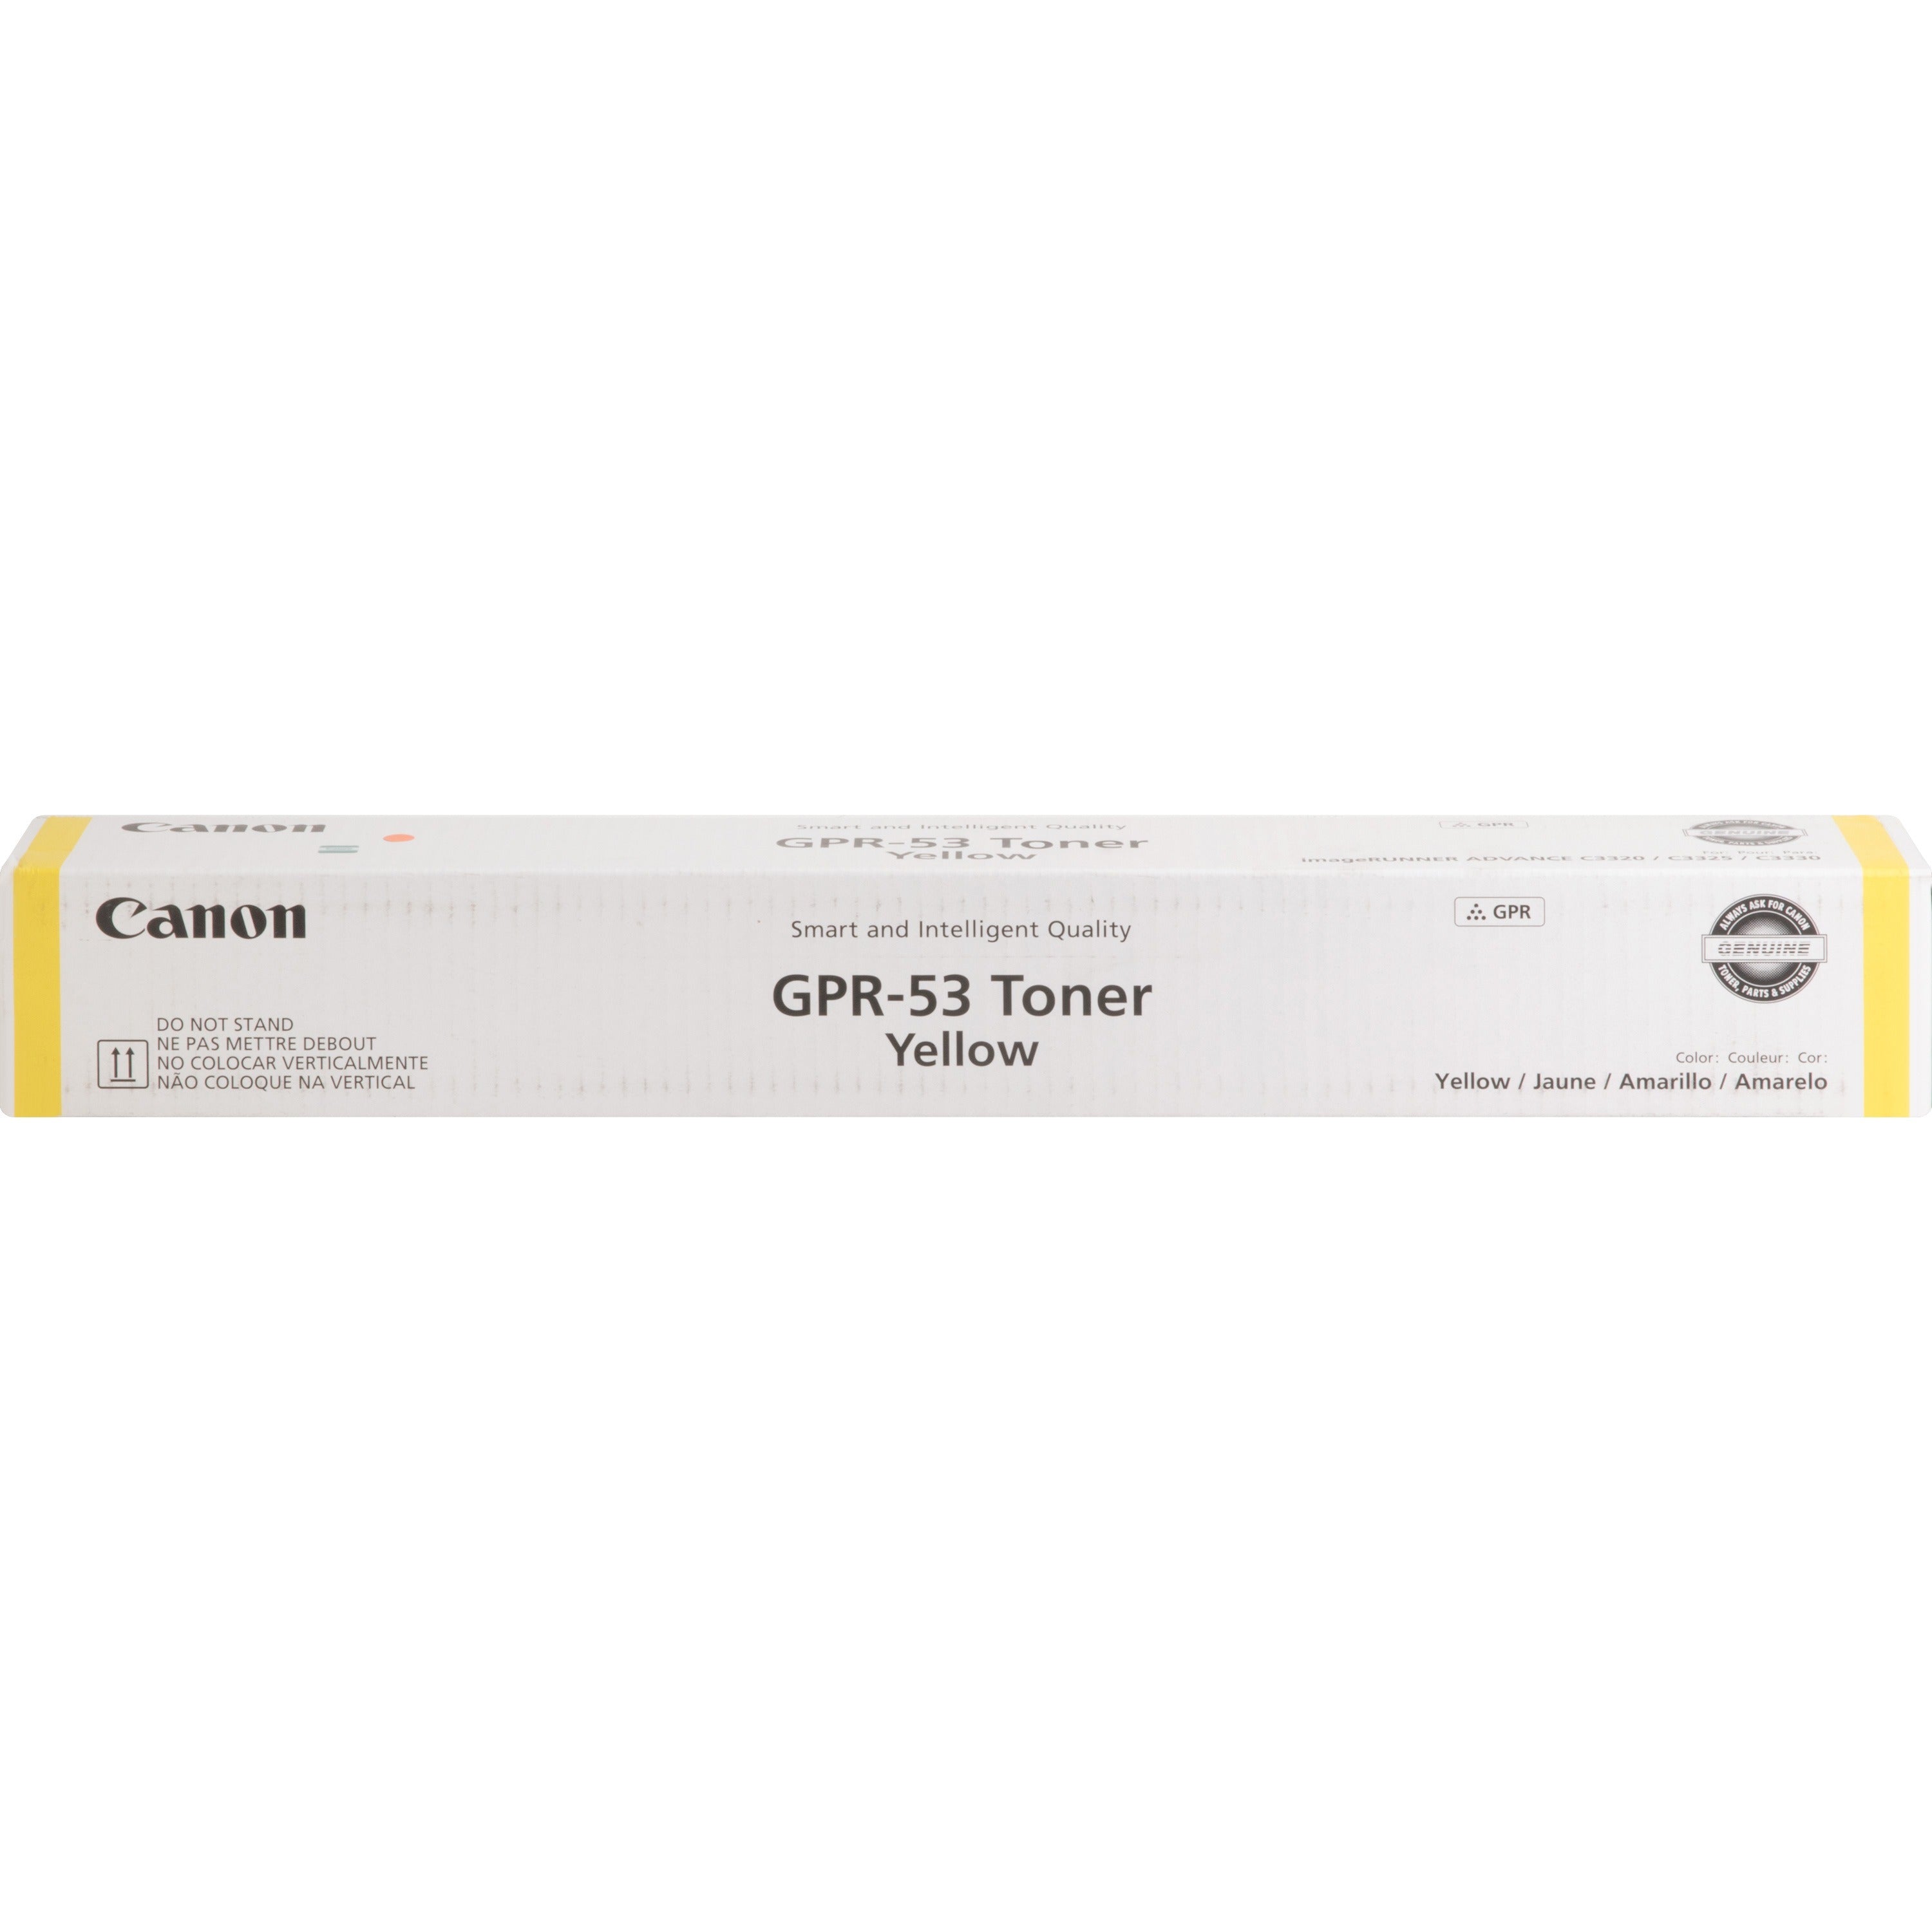 canon-gpr-53-original-laser-toner-cartridge-yellow-1-each-19000-pages_cnmgpr53y - 1